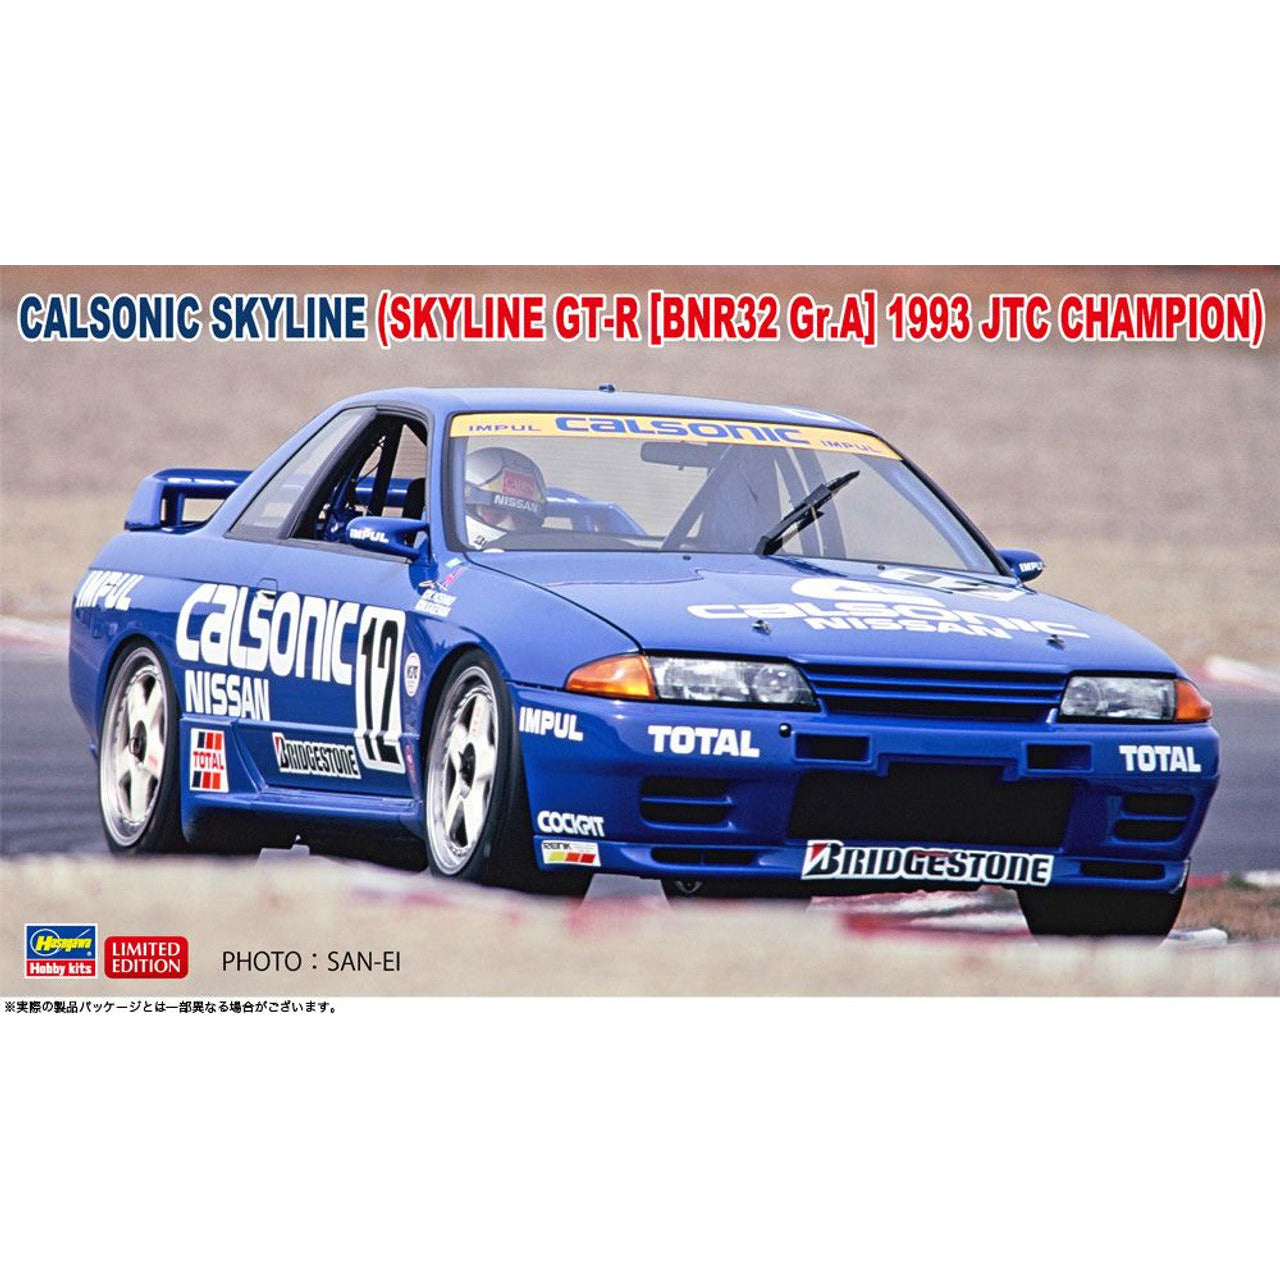 HASEGAWA 1/24 Calsonic Skyline (Skyline GT-R [BNR32 Gr.A] 1993 JTC Champion)